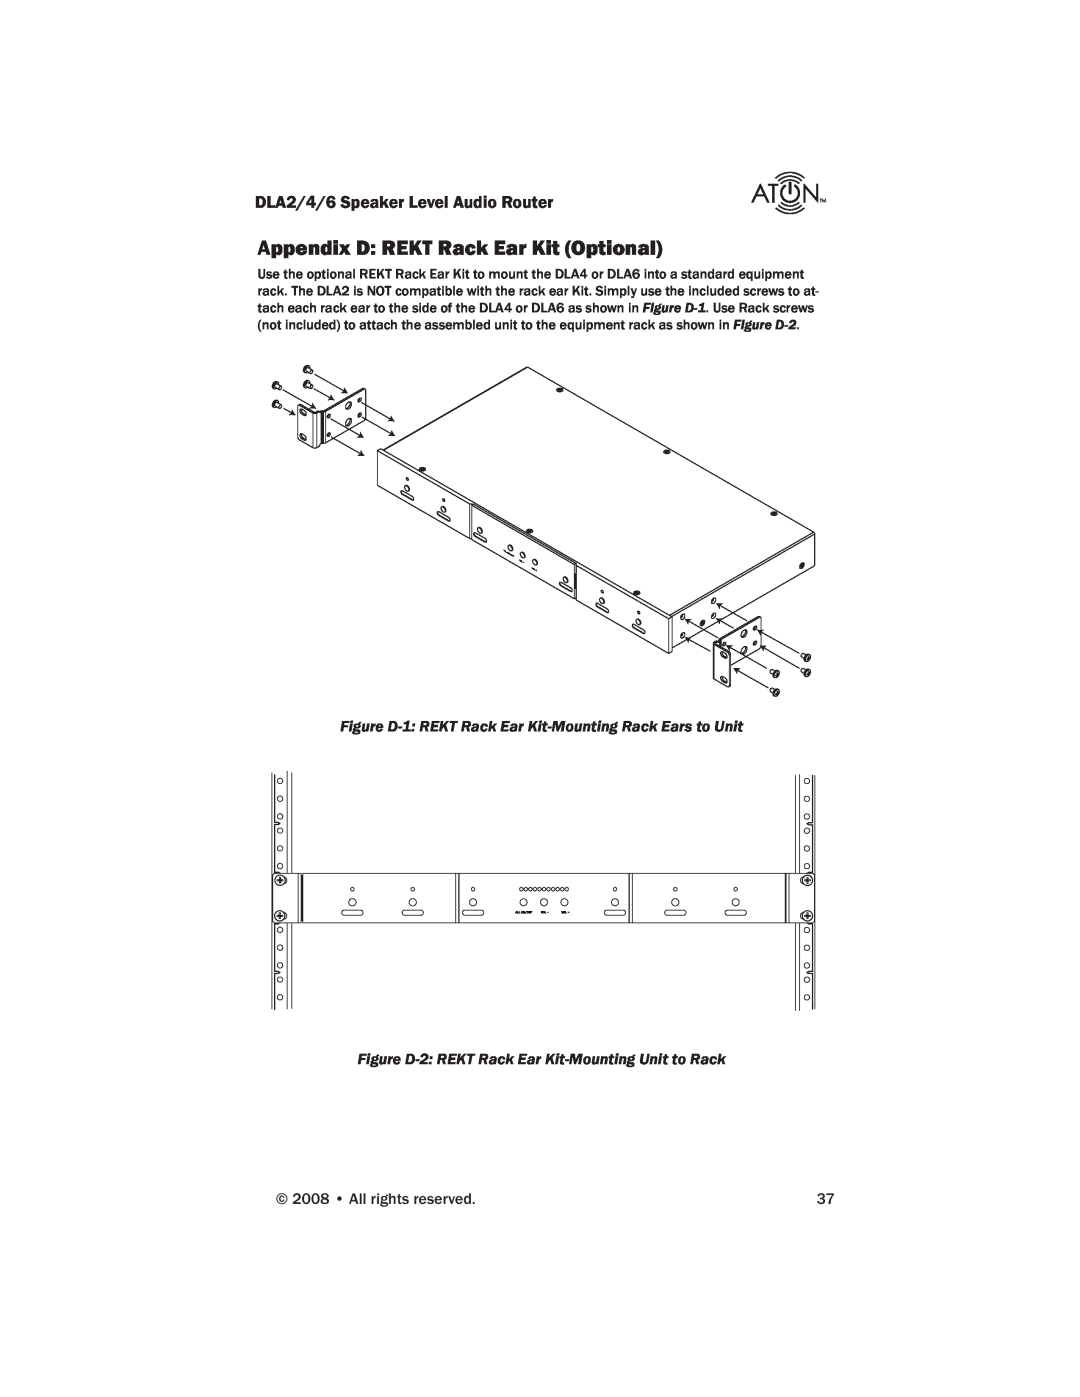 ATON DLA4, DLA2, DLA6 manual Appendix D REKT Rack Ear Kit Optional, Figure D-2 REKT Rack Ear Kit-MountingUnit to Rack 